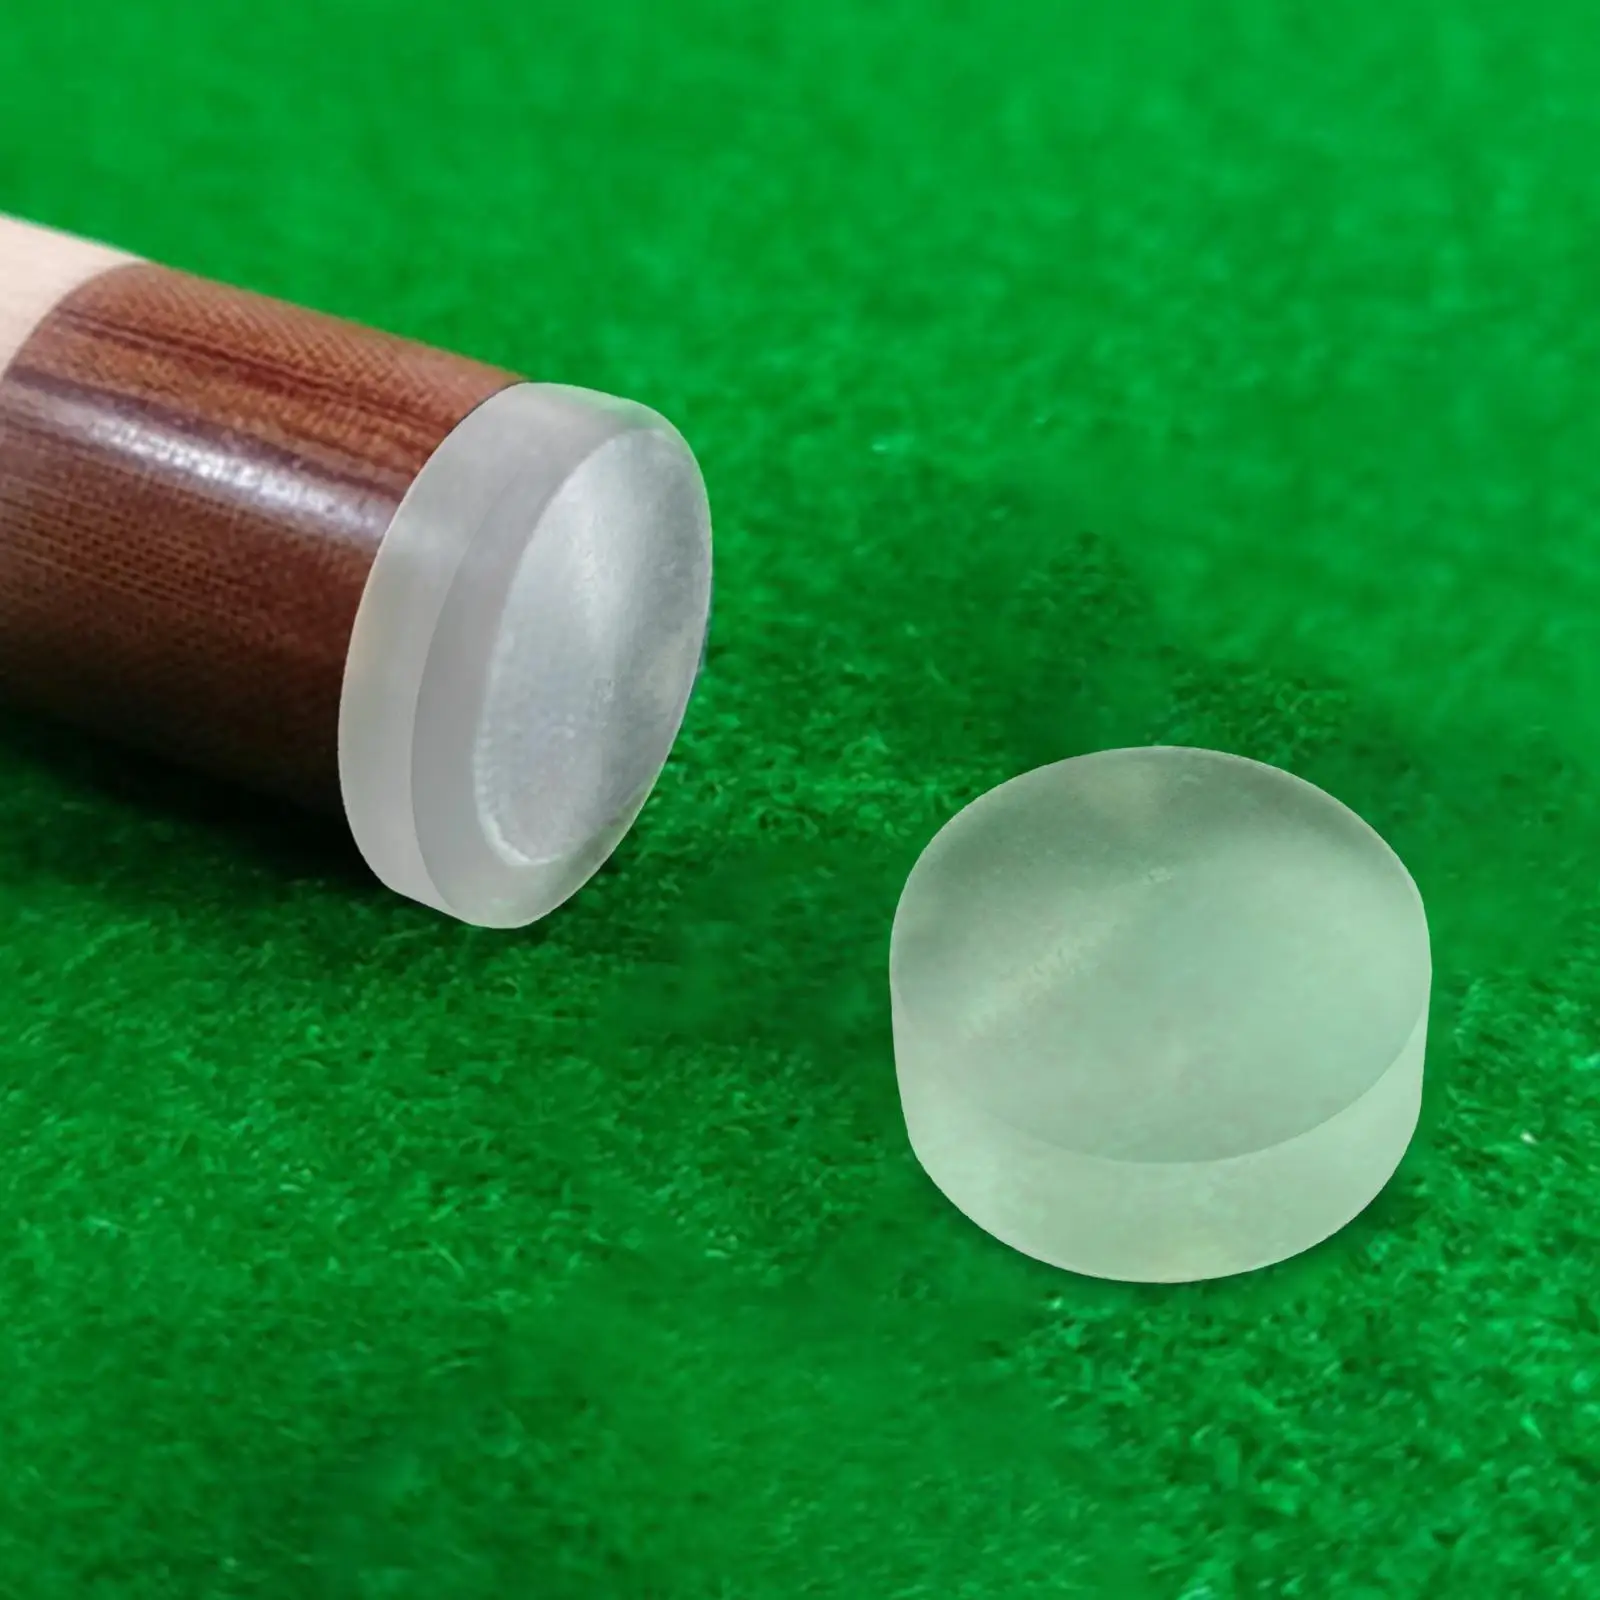 14mm Pool Cue Tip Durable 0.55in Repair Glue on Break Jump Tip Snooker Cue Tip for Snooker Billiards Pool Cue Tip Care Accessory